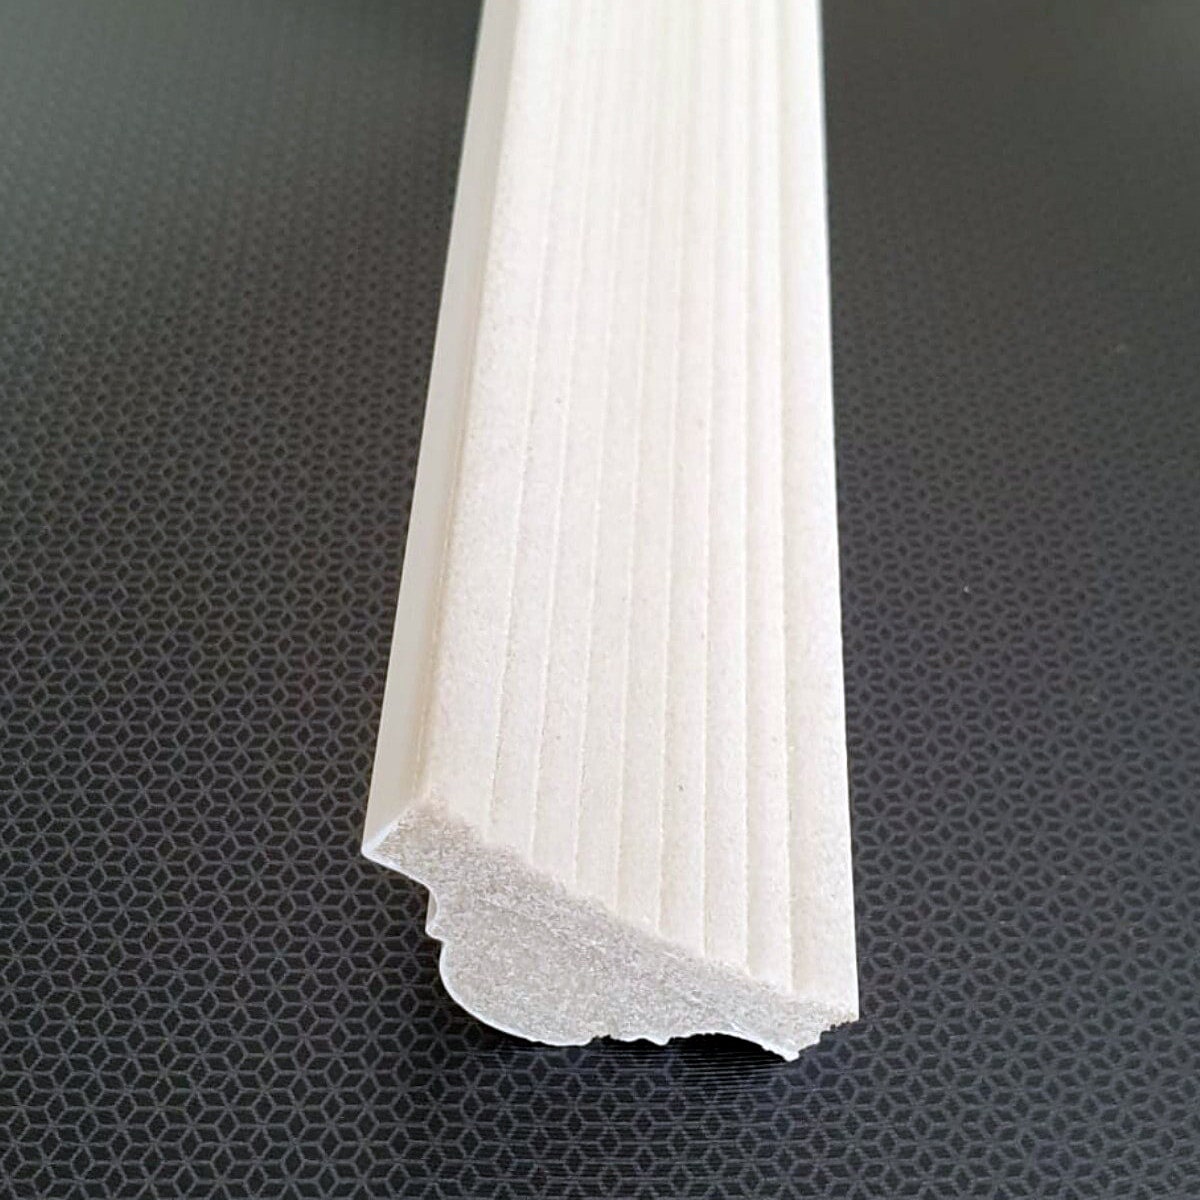 PX164 - Axxent Plain Duropolymer Panel Molding, Primed White. Length